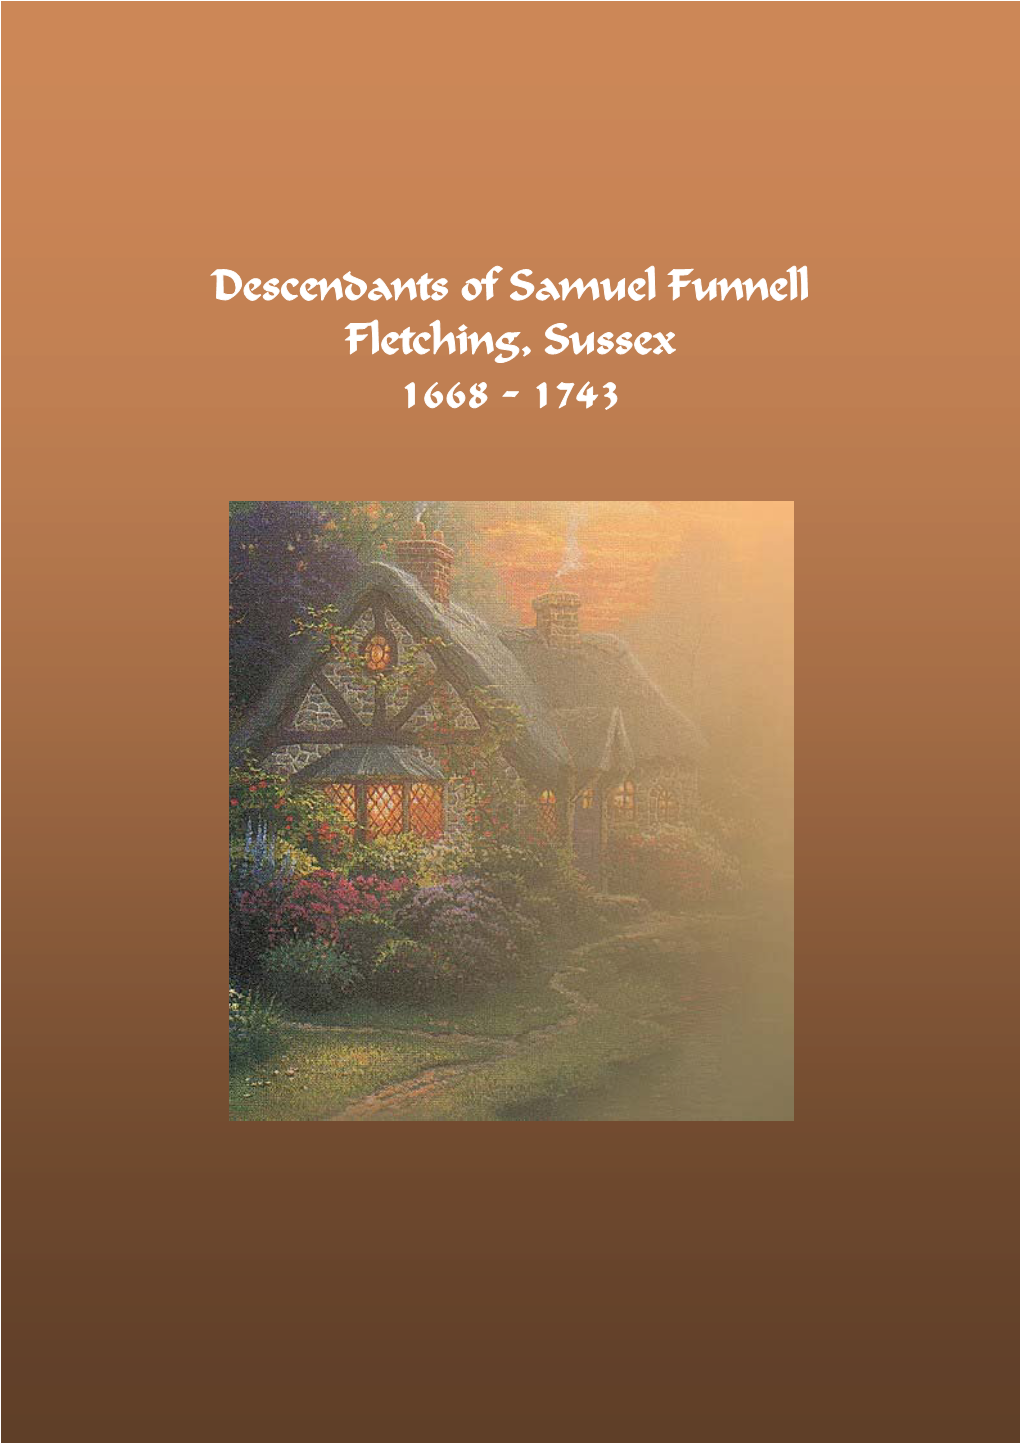 Samuel Funnell Fletching, Sussex 1668 - 1743